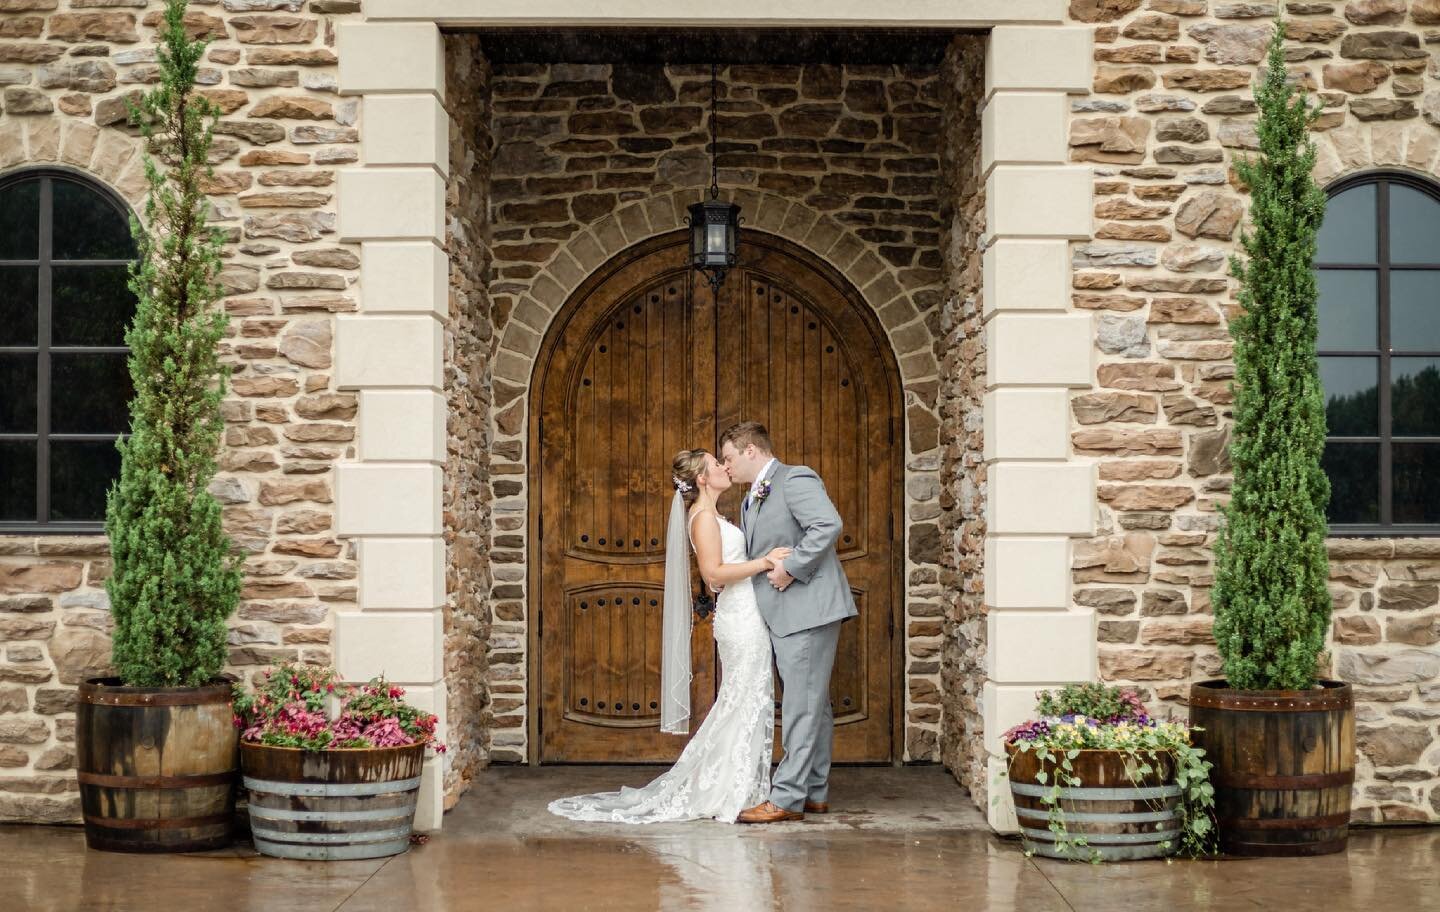 Congratulations to @alliebeltz and Joe! 🎉 
&bull;
&bull;
&bull;
#folinoestate #weddingday #margaritadewaltphotography #newlyweds #magicalmoments #lace #lehighvalleyweddings